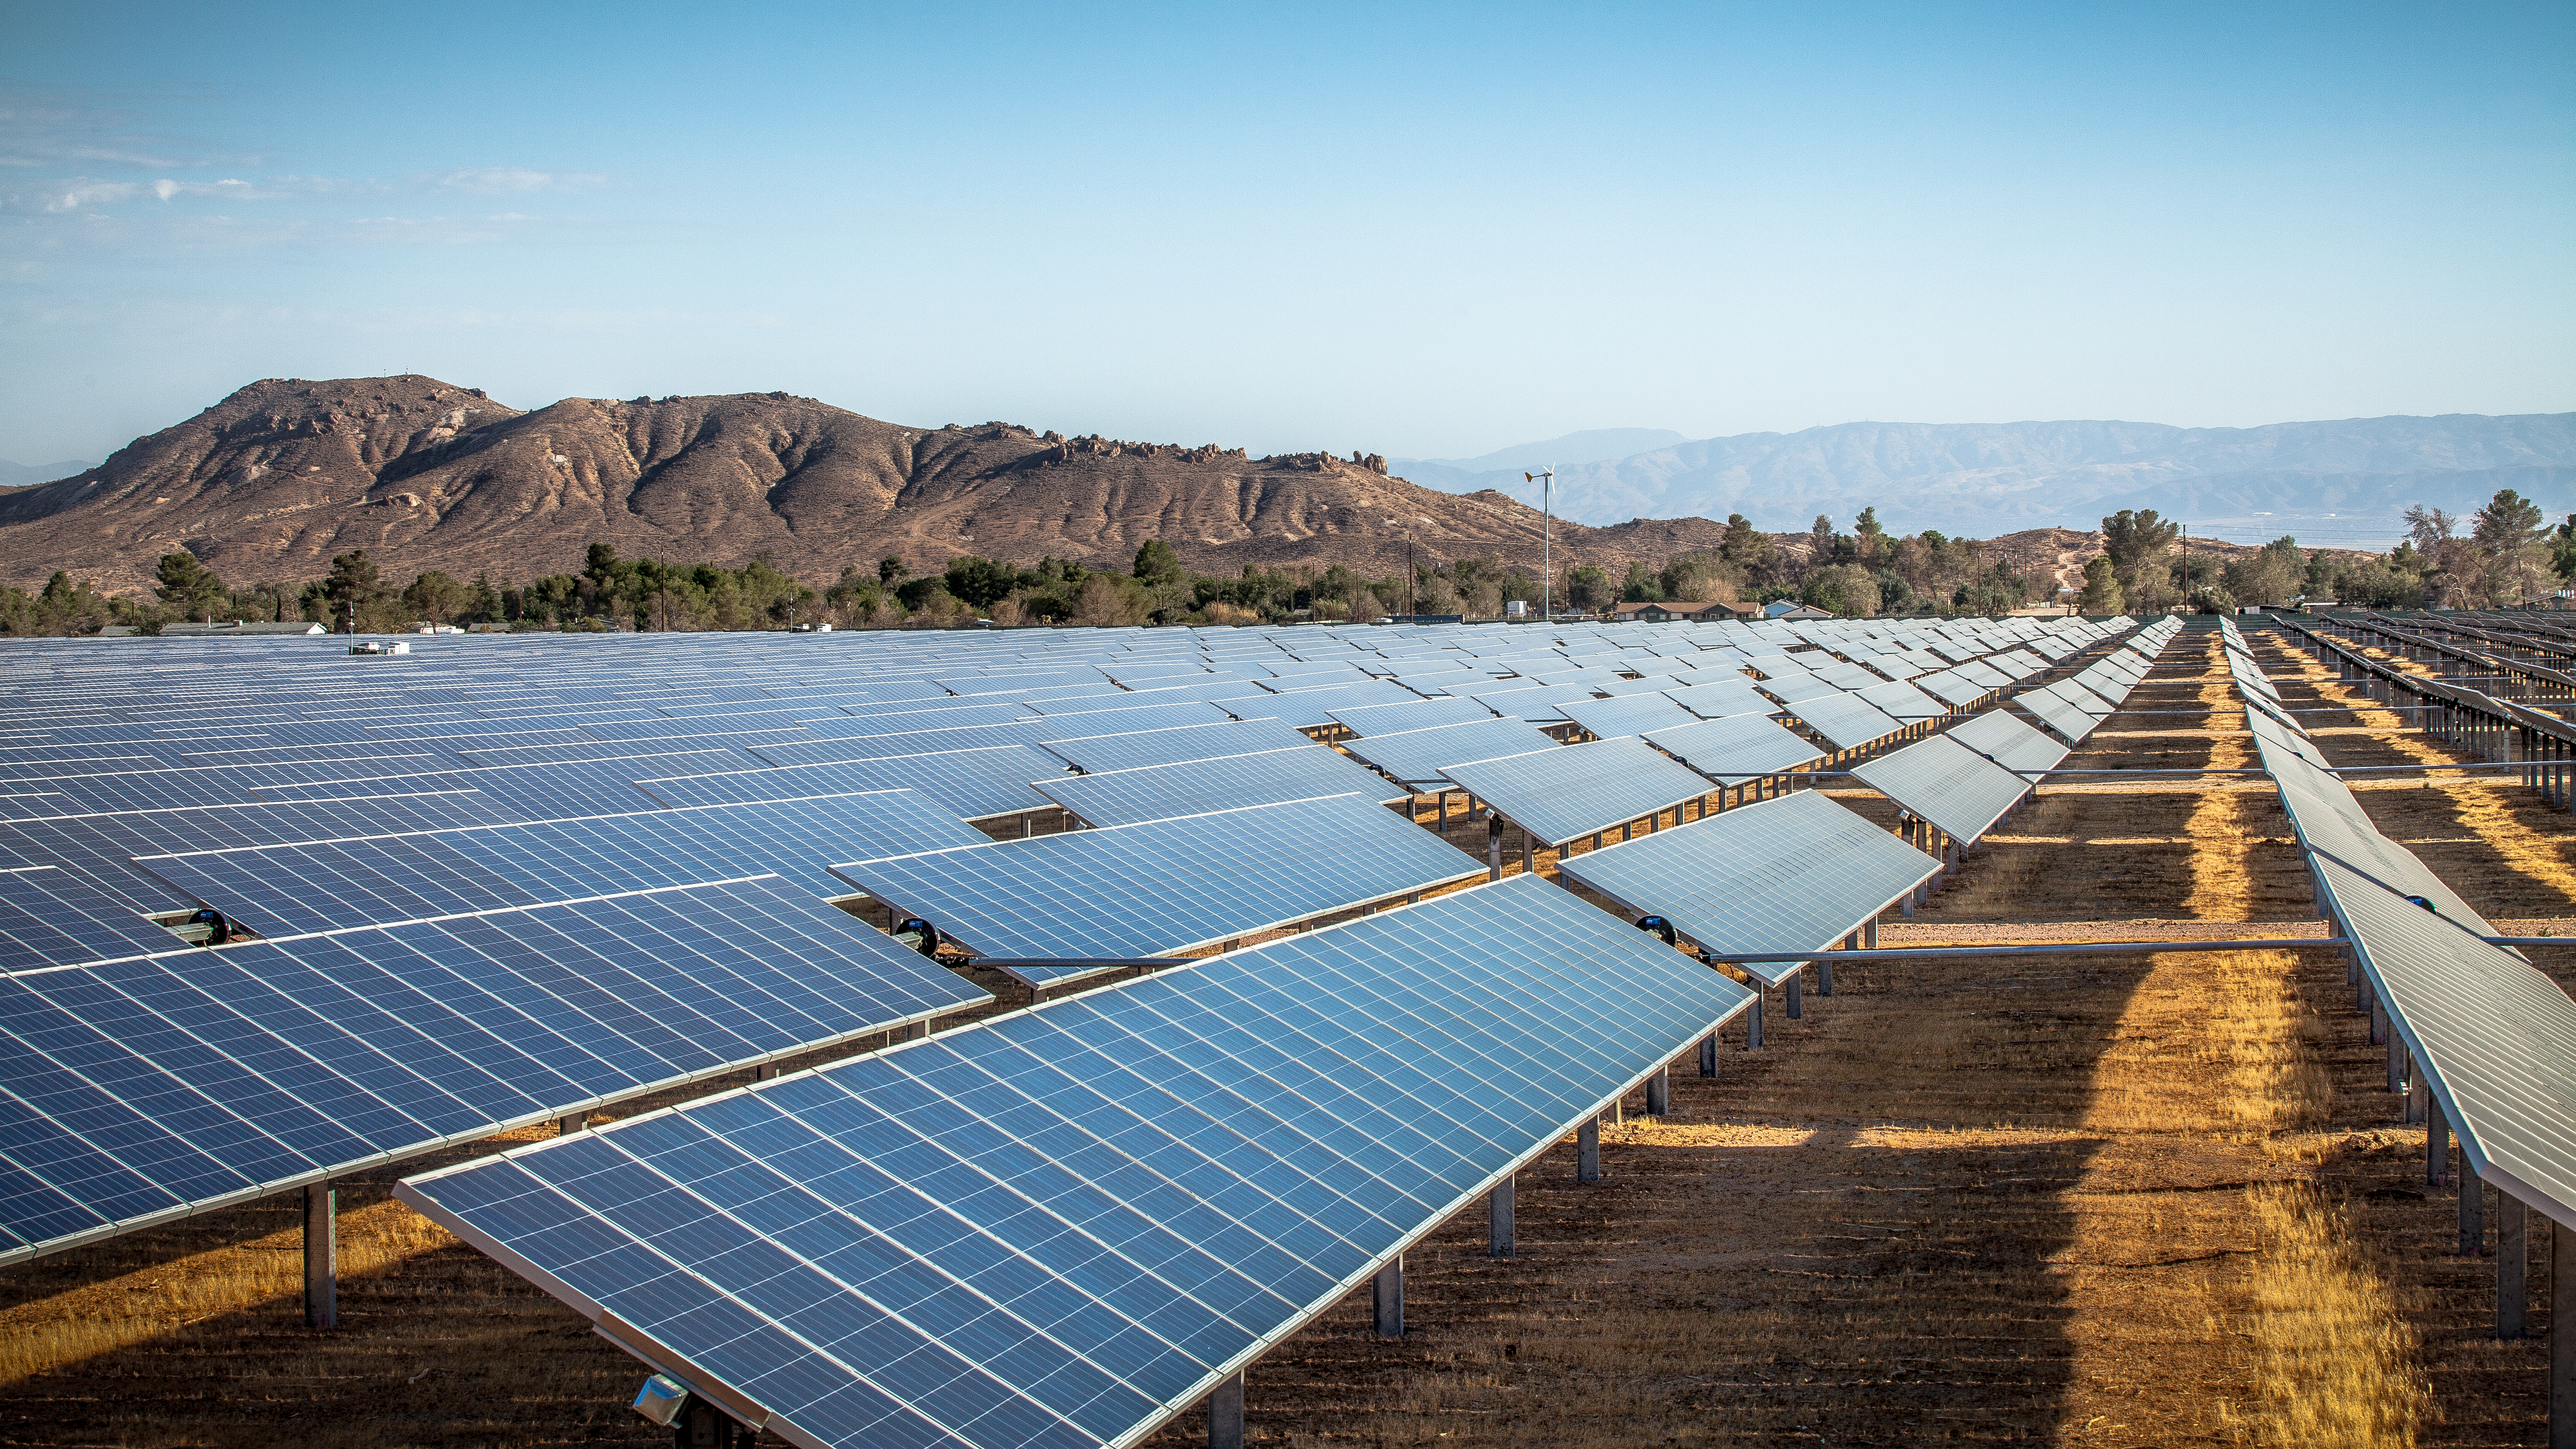 Photovoltaic Solar Array In Rosamond, California